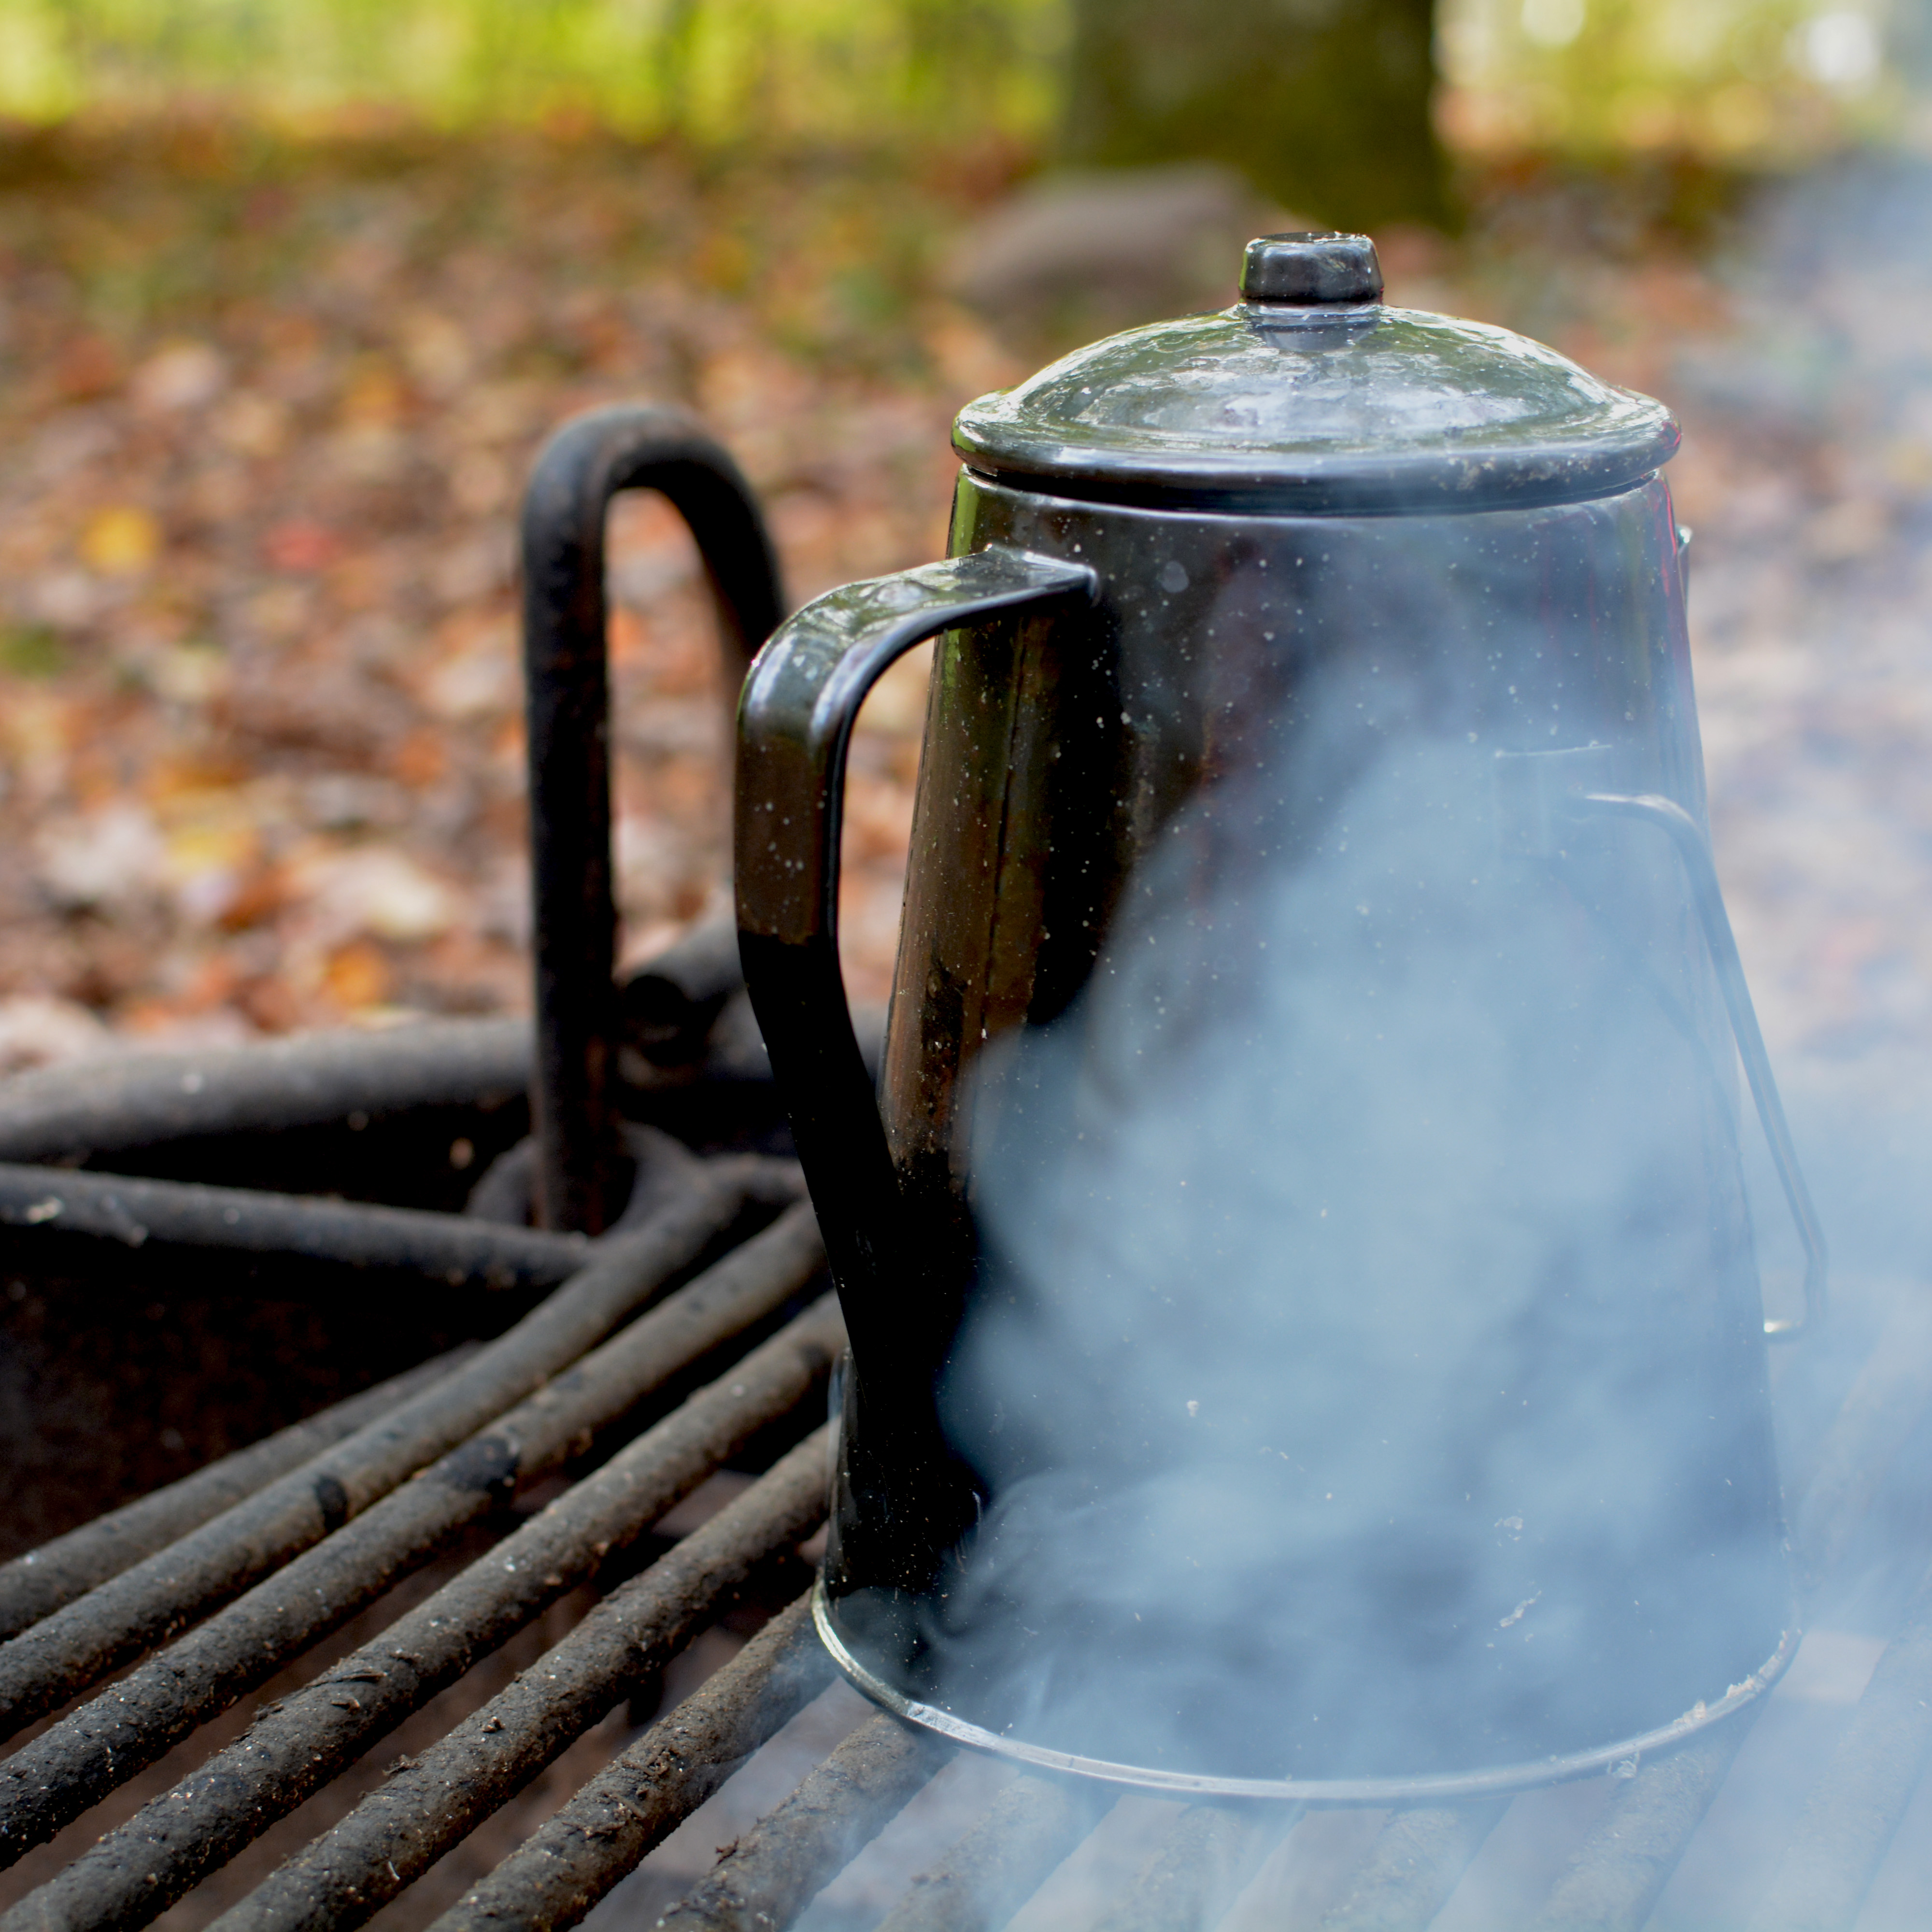 A kettle heating over an outdoor campfire